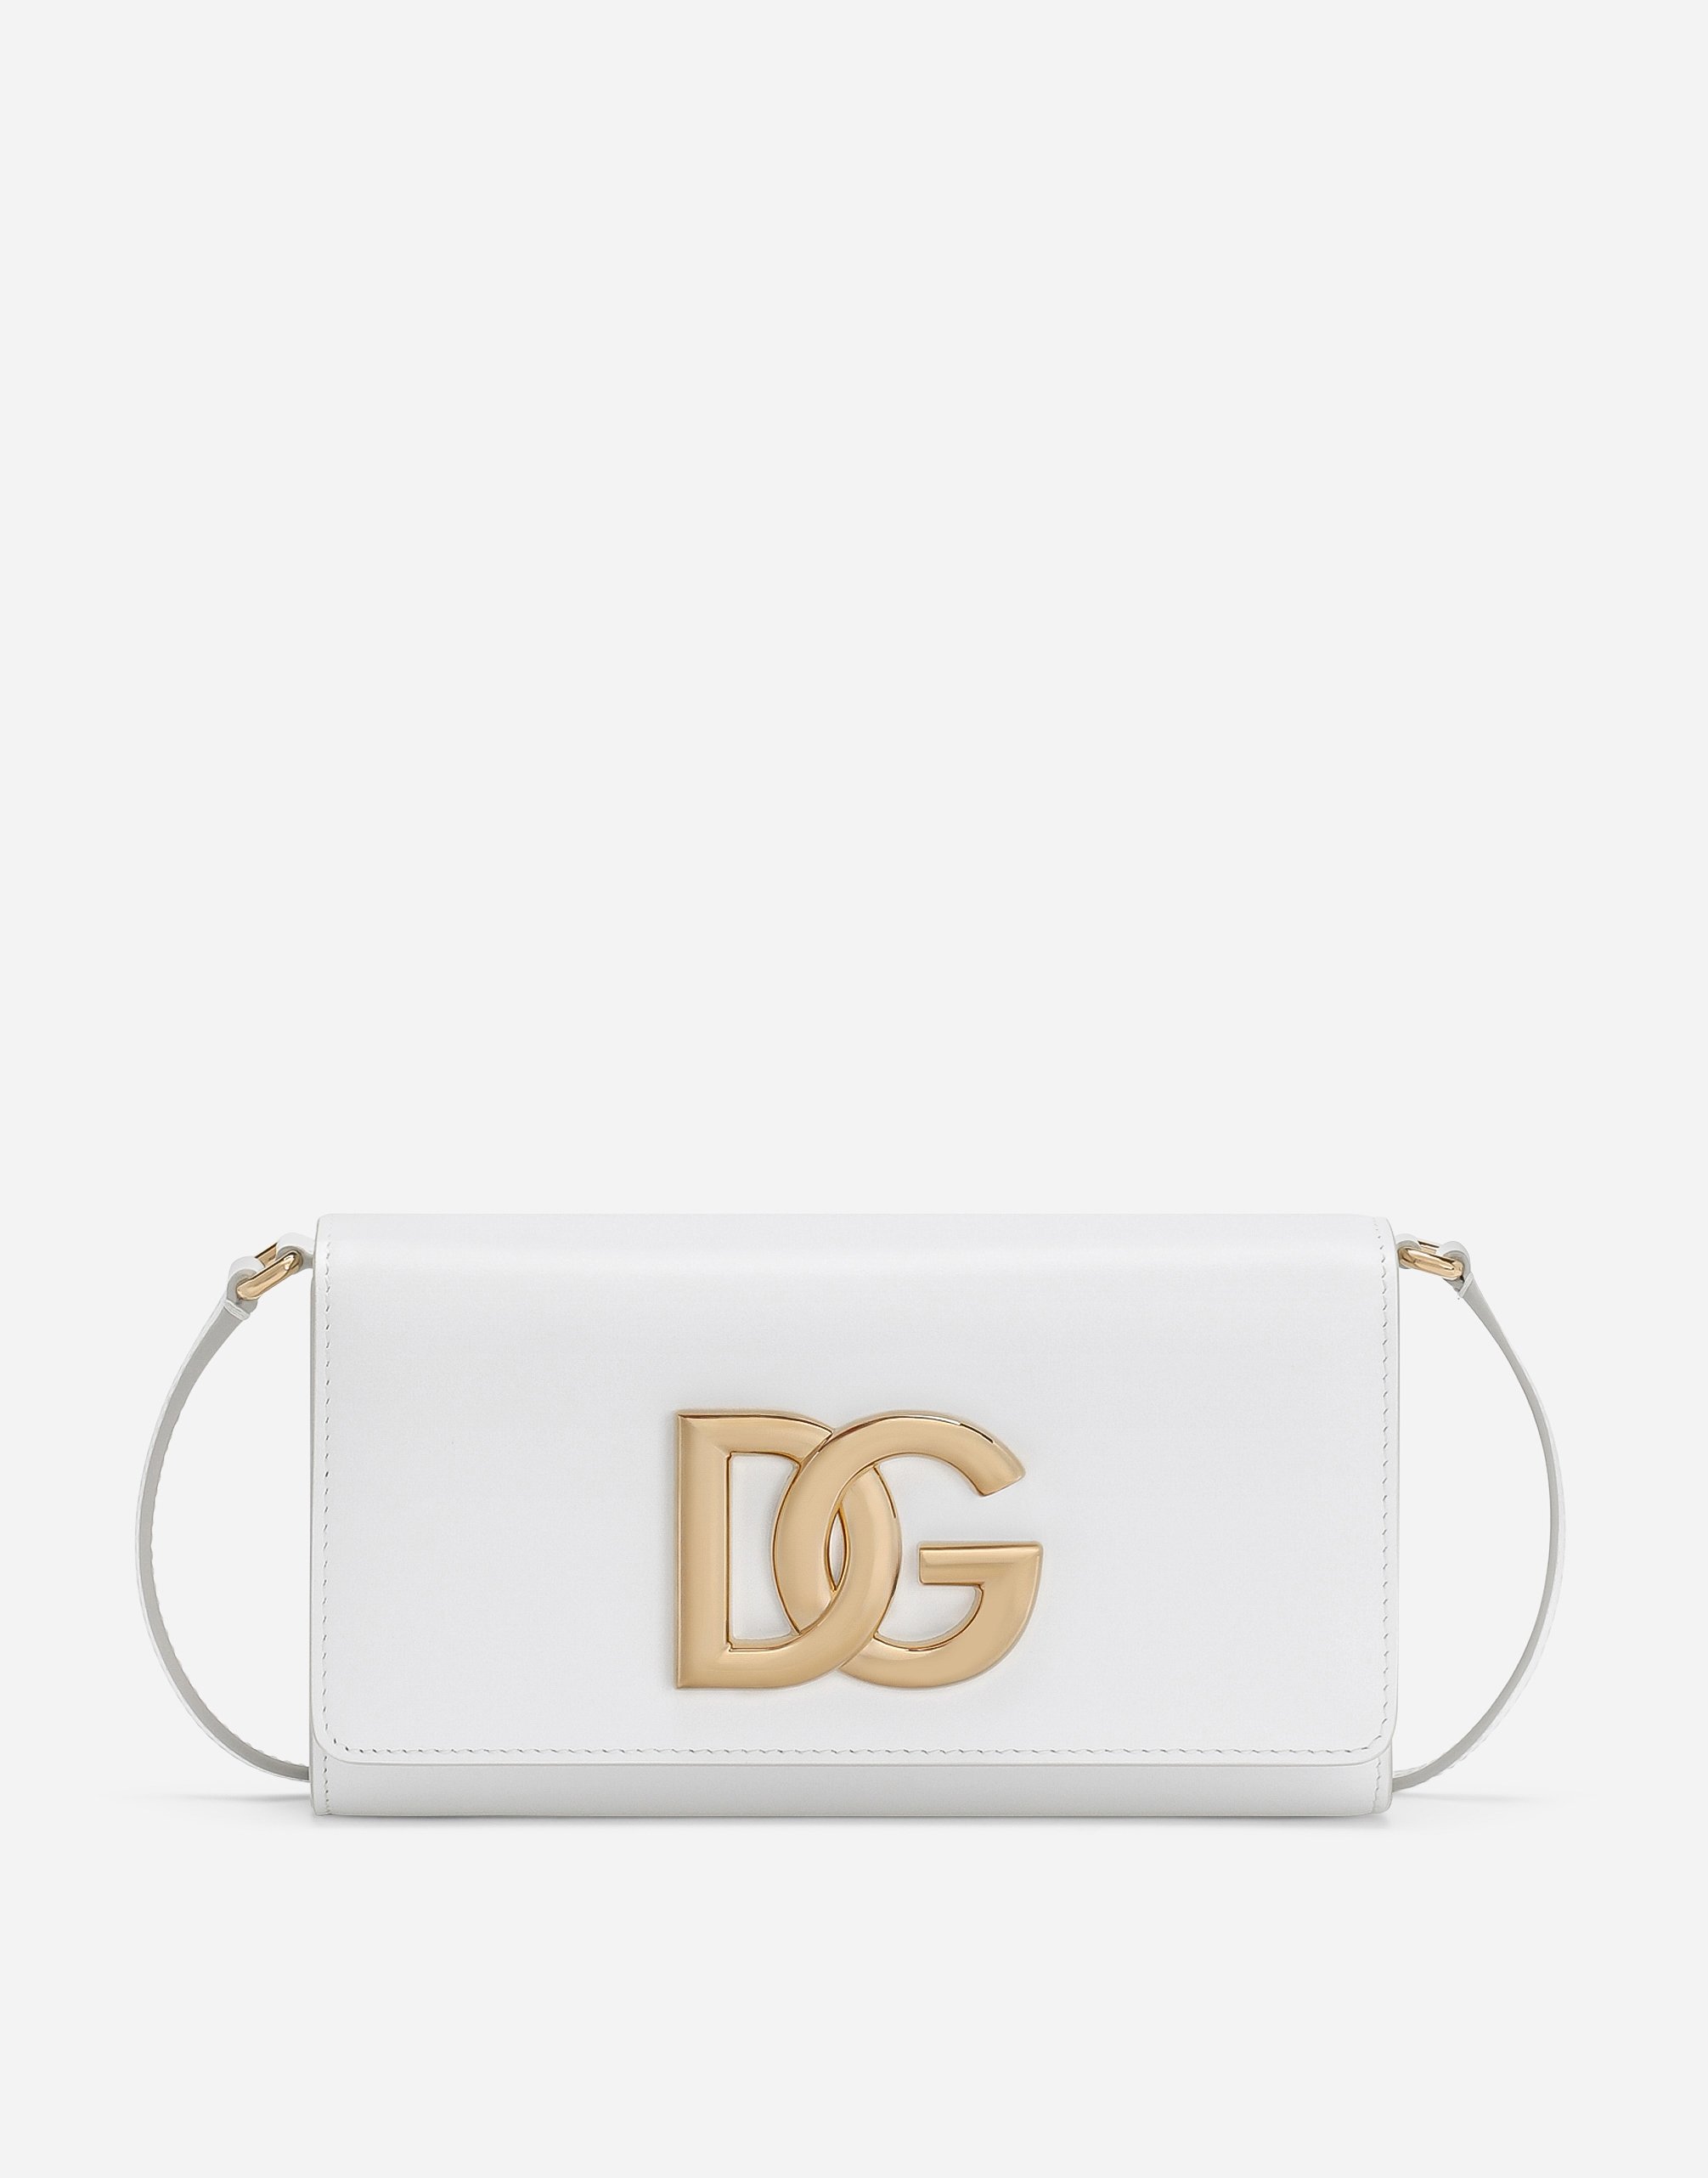 Dolce & Gabbana Calfskin 3.5 Clutch In White